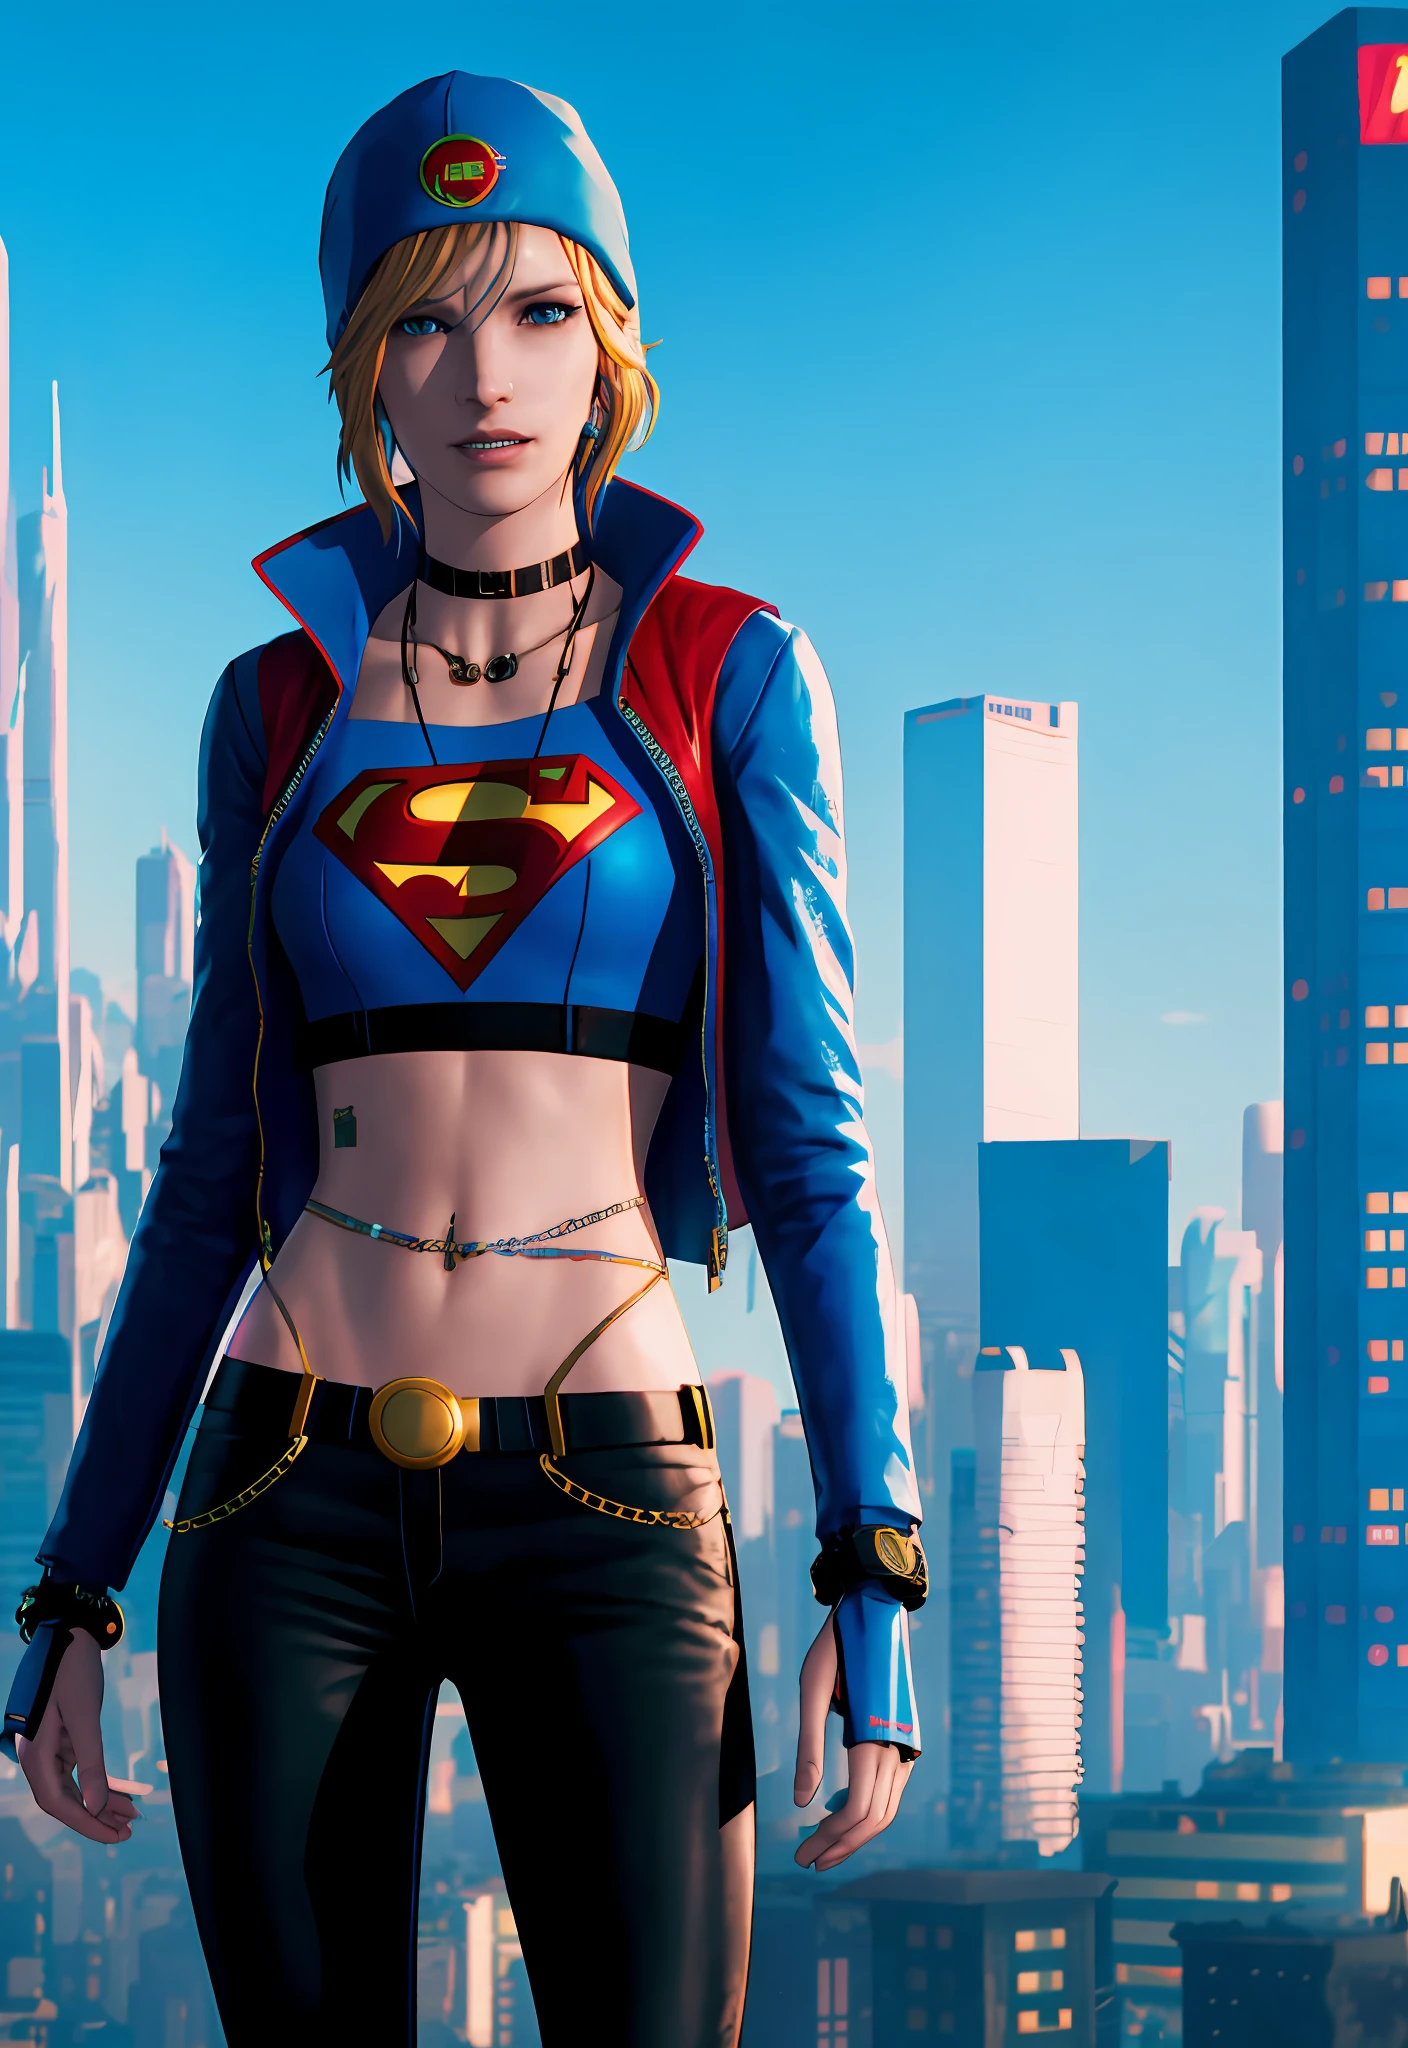 Cyberpunk supergirl, slim waist, ultra-detailed, masterpiece, high quality, cyberpunk city background, chloeprice, blonde hair, blue eyes, beanie, choker, tattos, superman s on chest